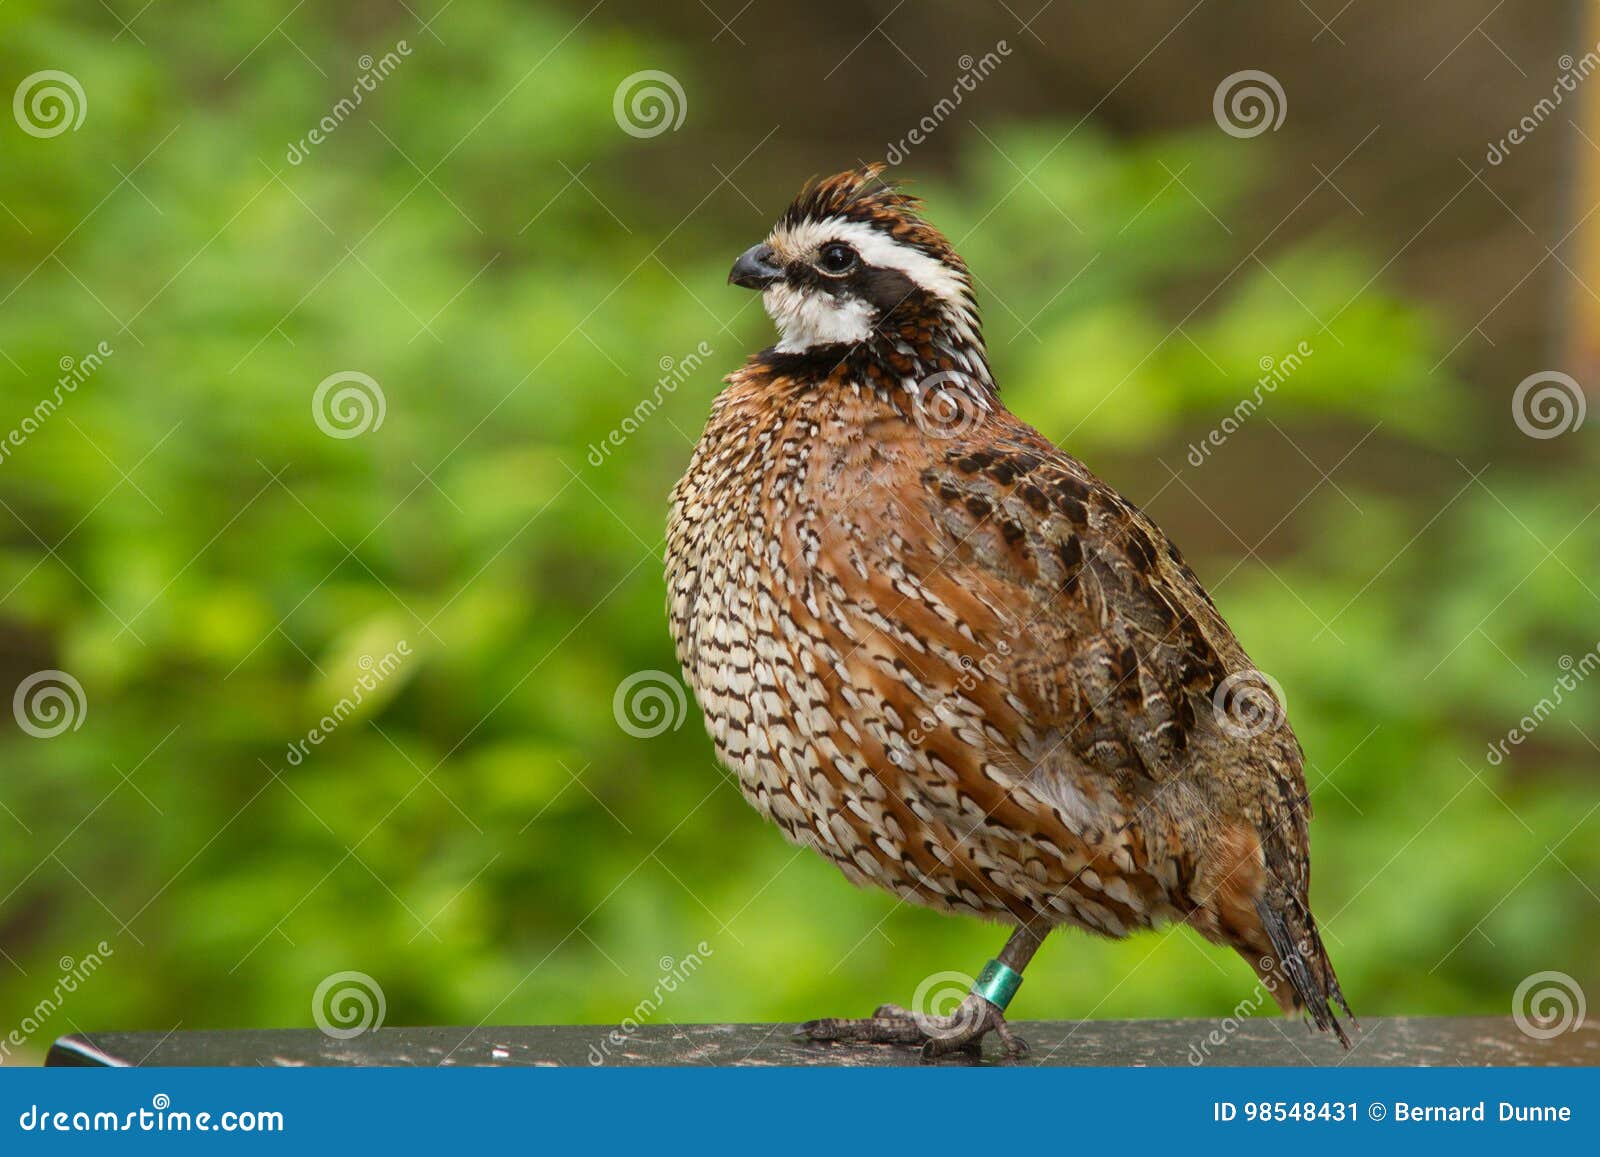 a bob white quail perched closeup side view